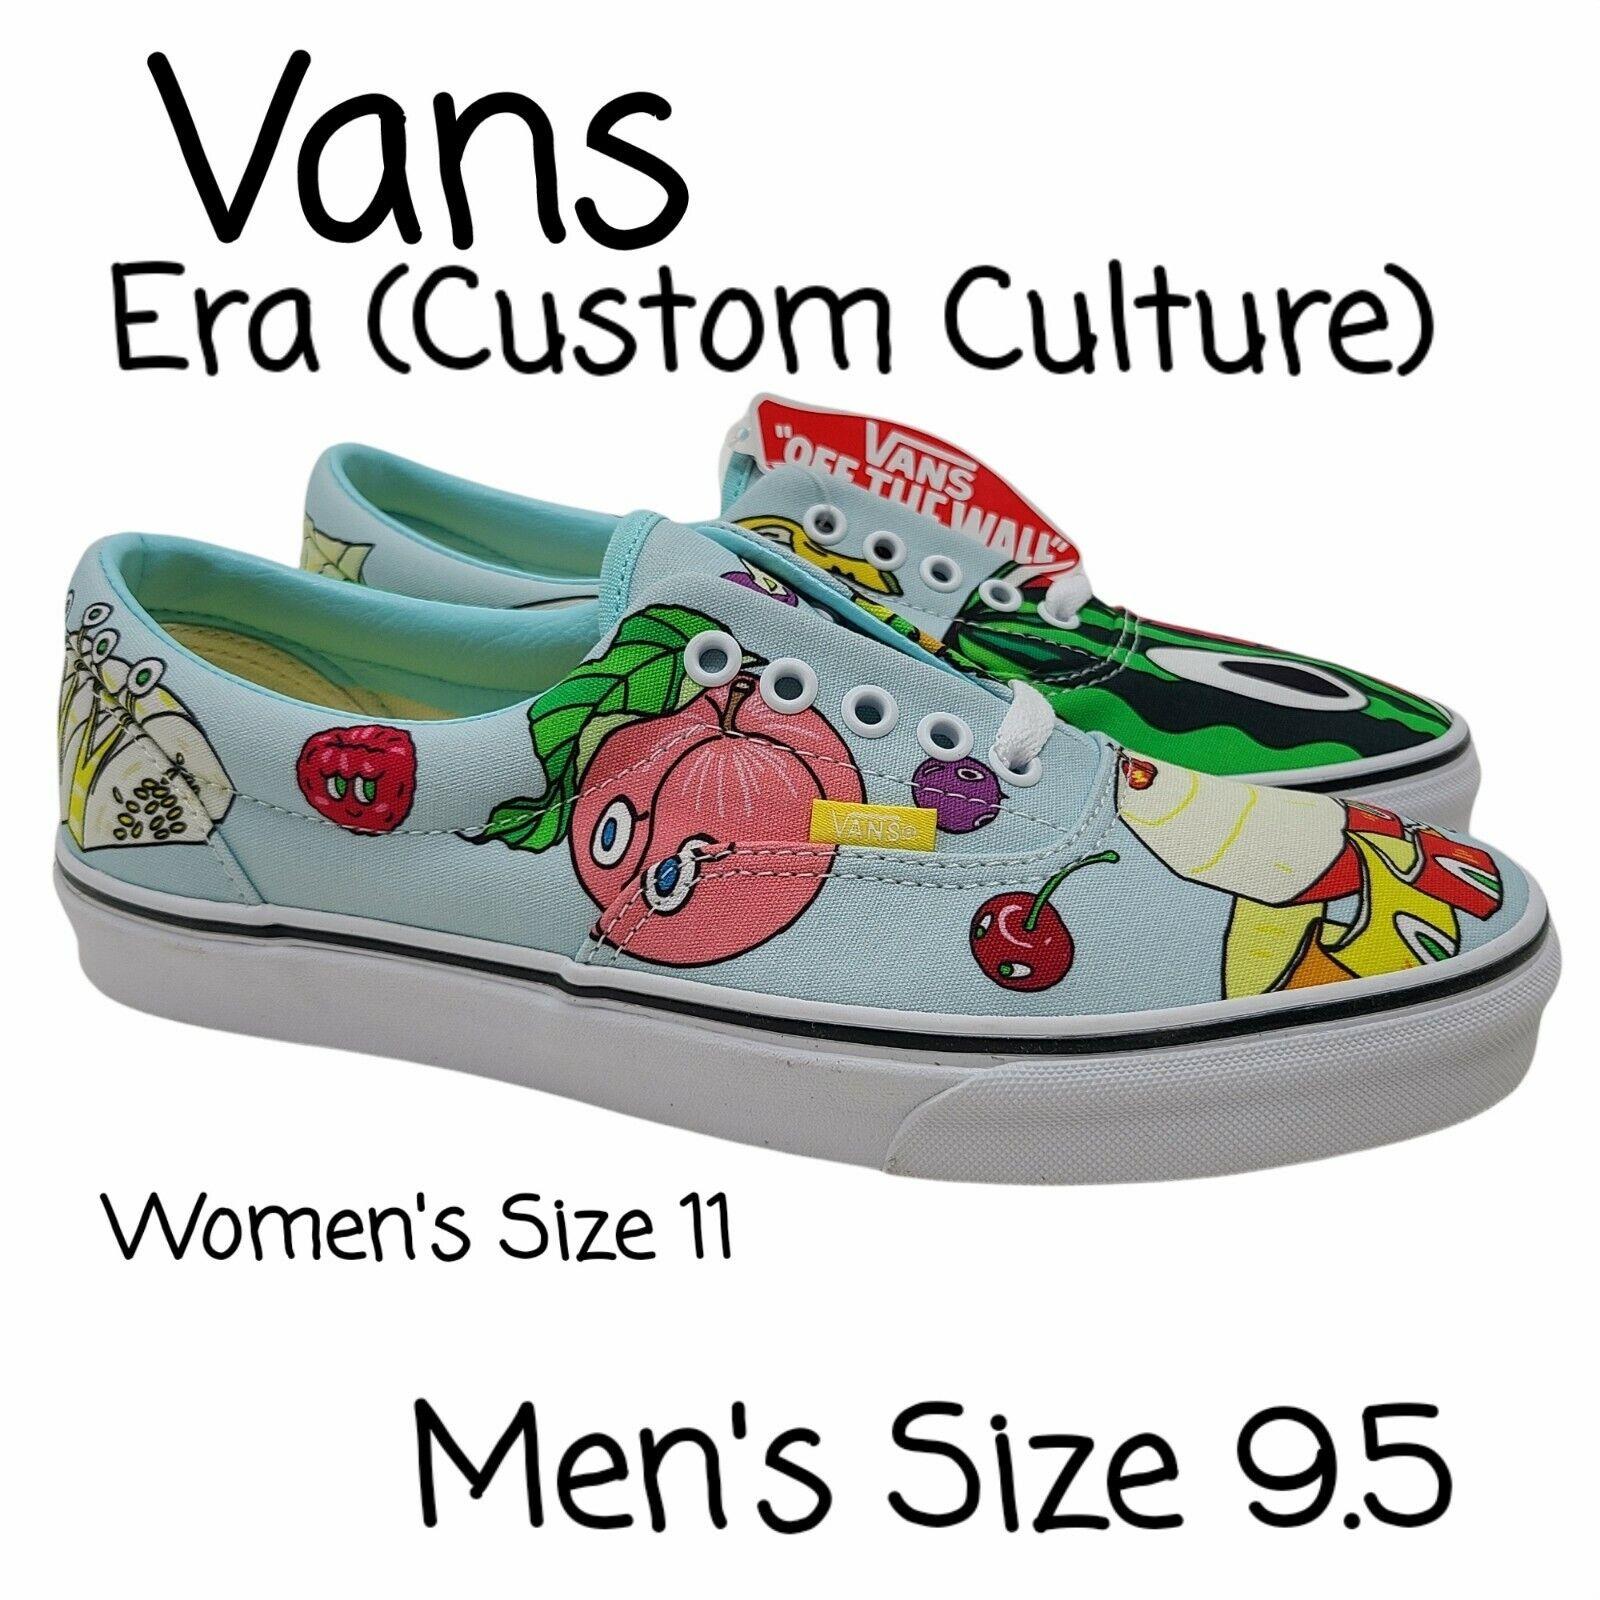 Vans Era Custom Culture Hoya Tropical Fruits Sneaker Shoe US Size 9.5 Men